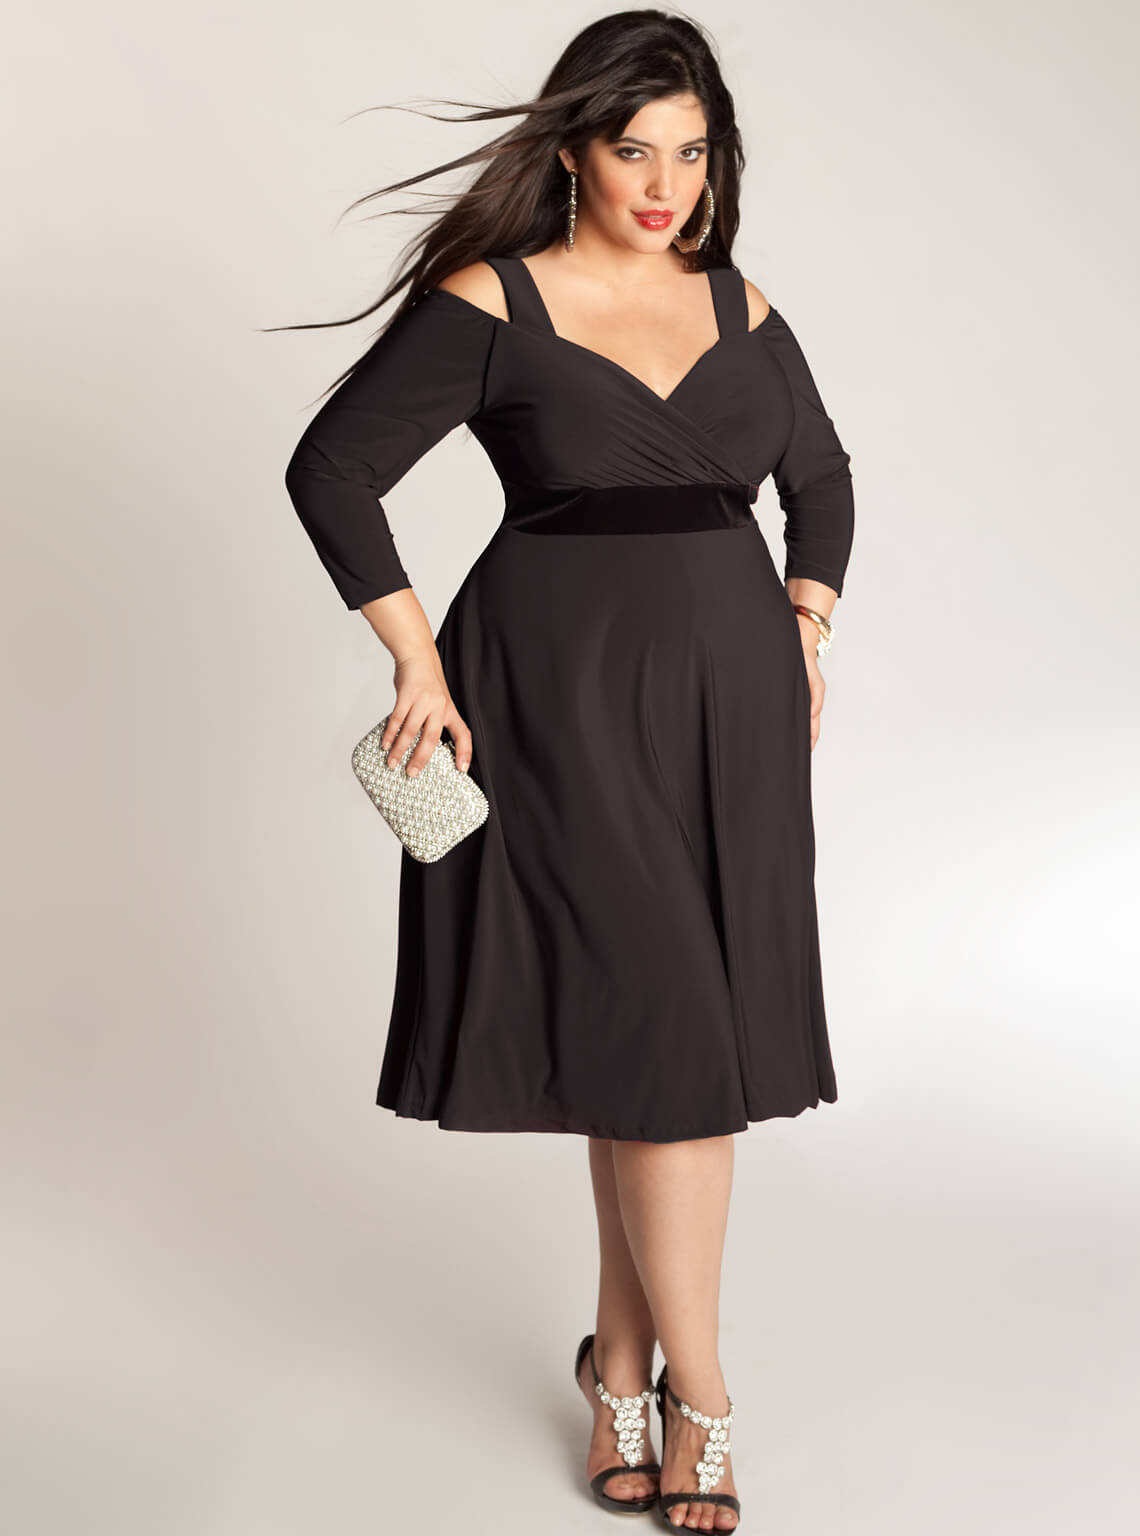 Styling Plus Size Little Black Dresses for Elegant Looks | ArticleCube